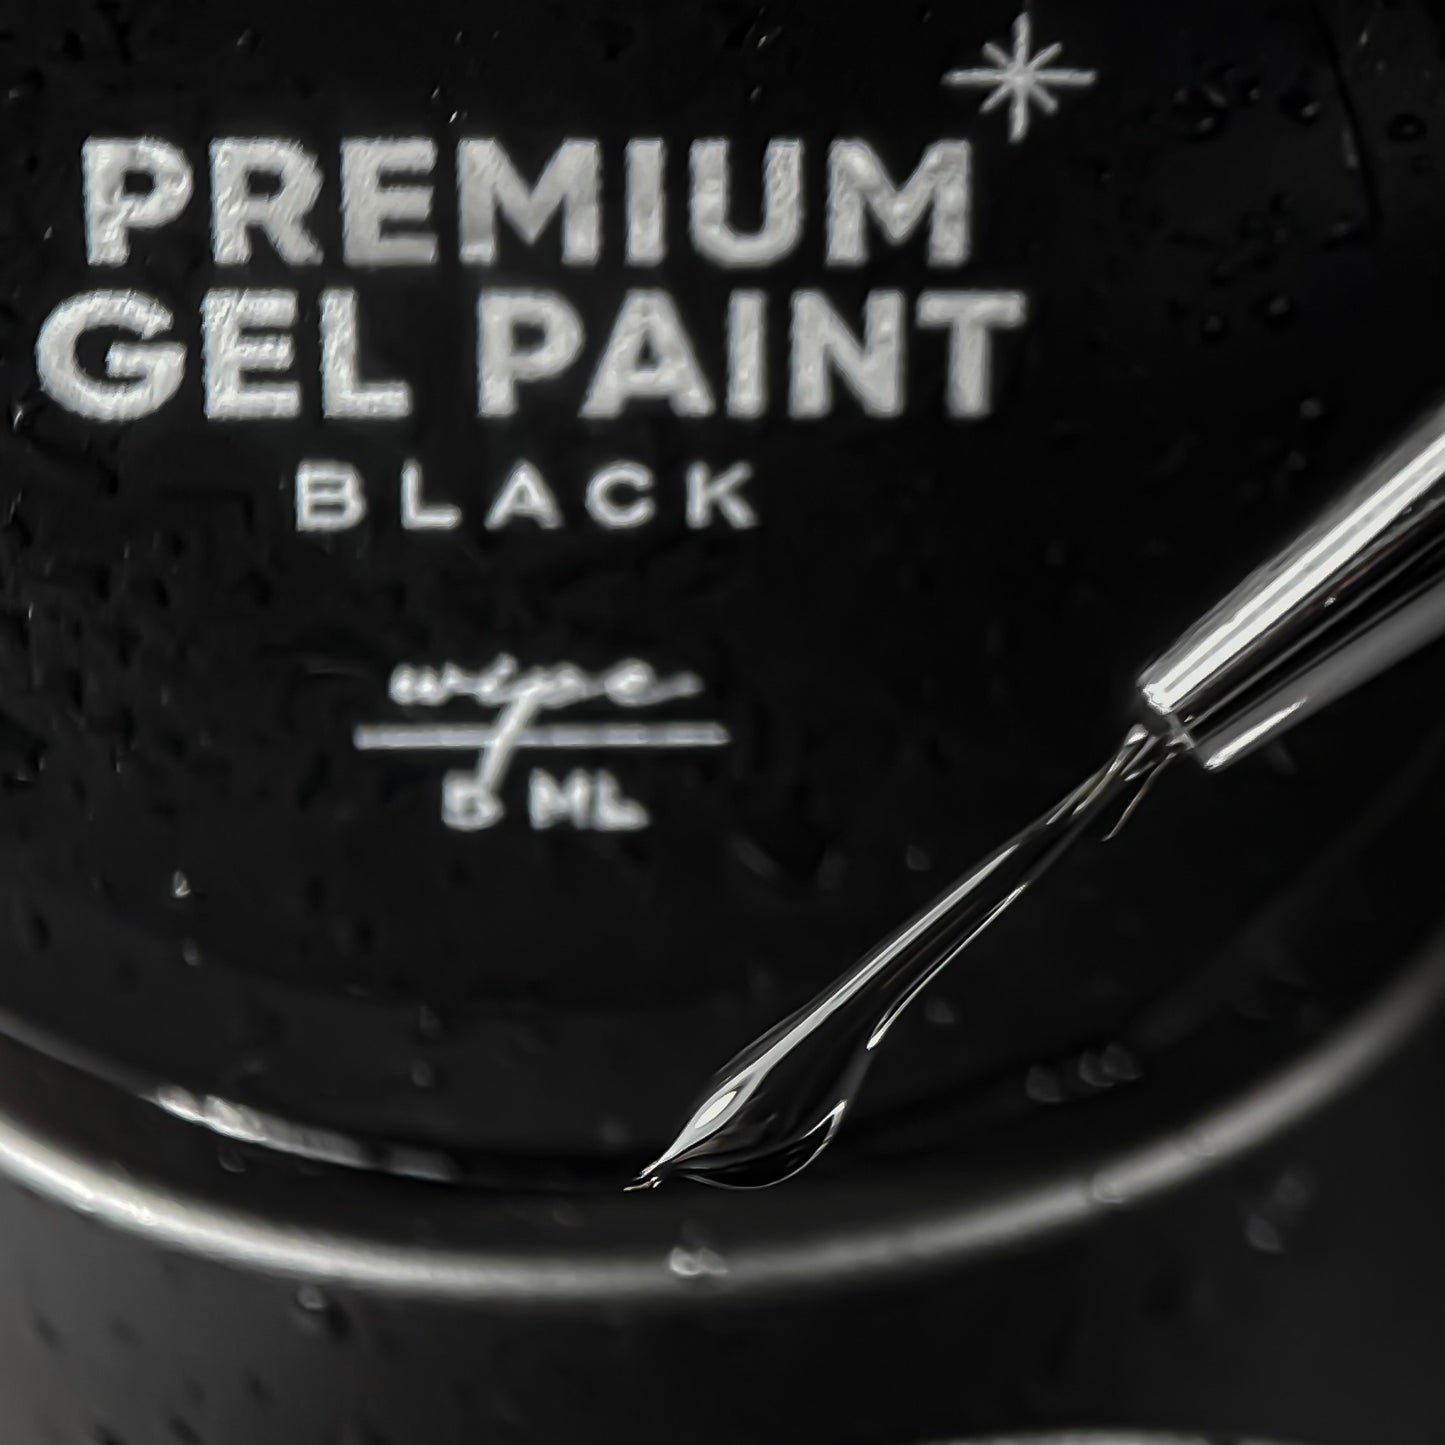 Premium gel paint Black wipe 5 ml NAILSOFTHEDAY